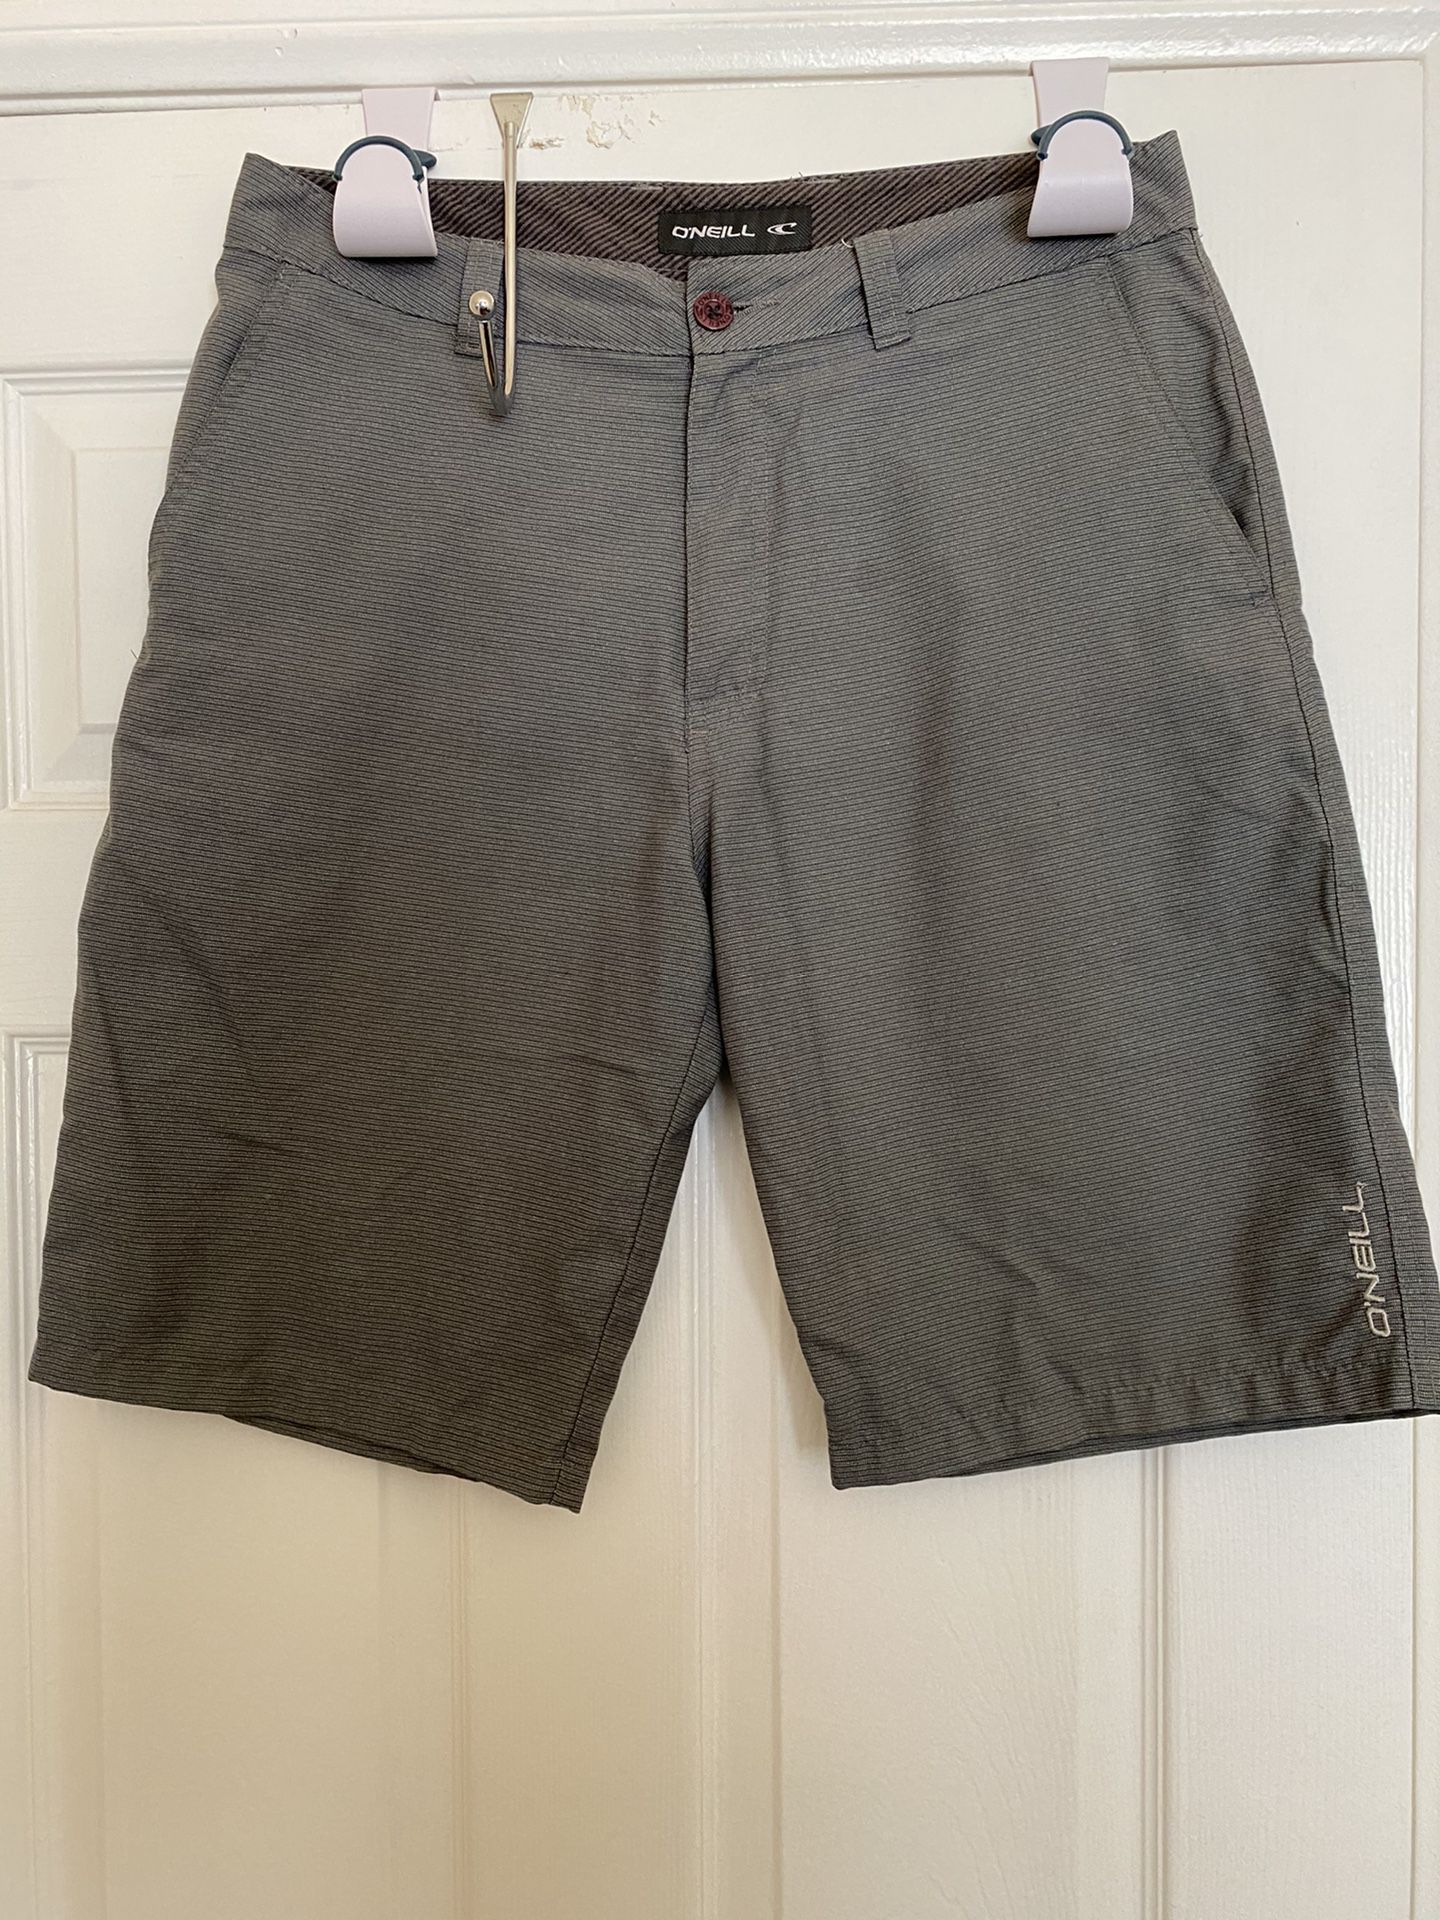 O Neill Shorts *Like New* Size 32